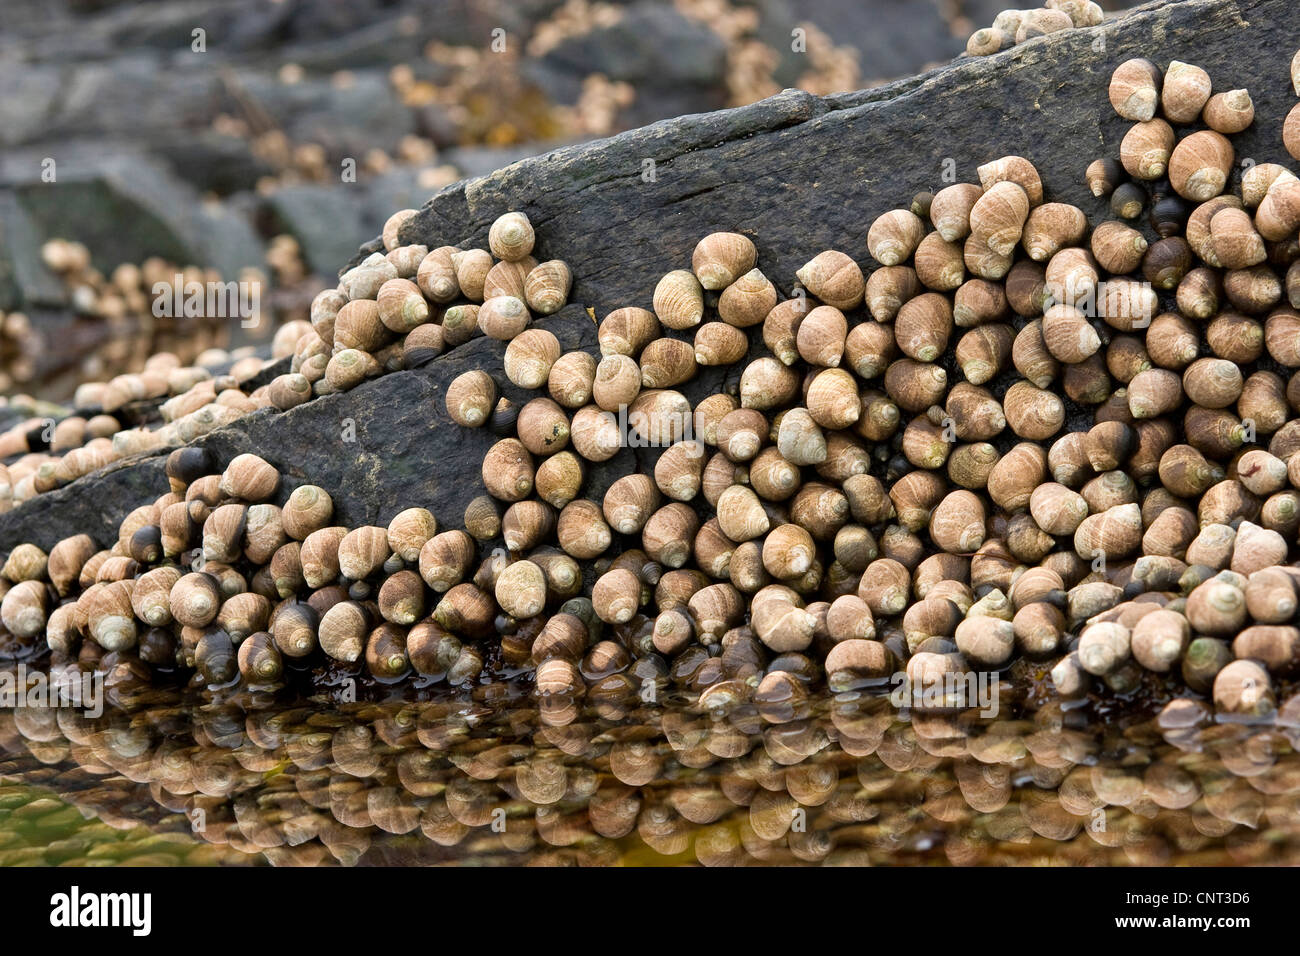 common periwinkle, common winkle, edible winkle (Littorina littorea), at low tide on rock, rocky tideland Stock Photo